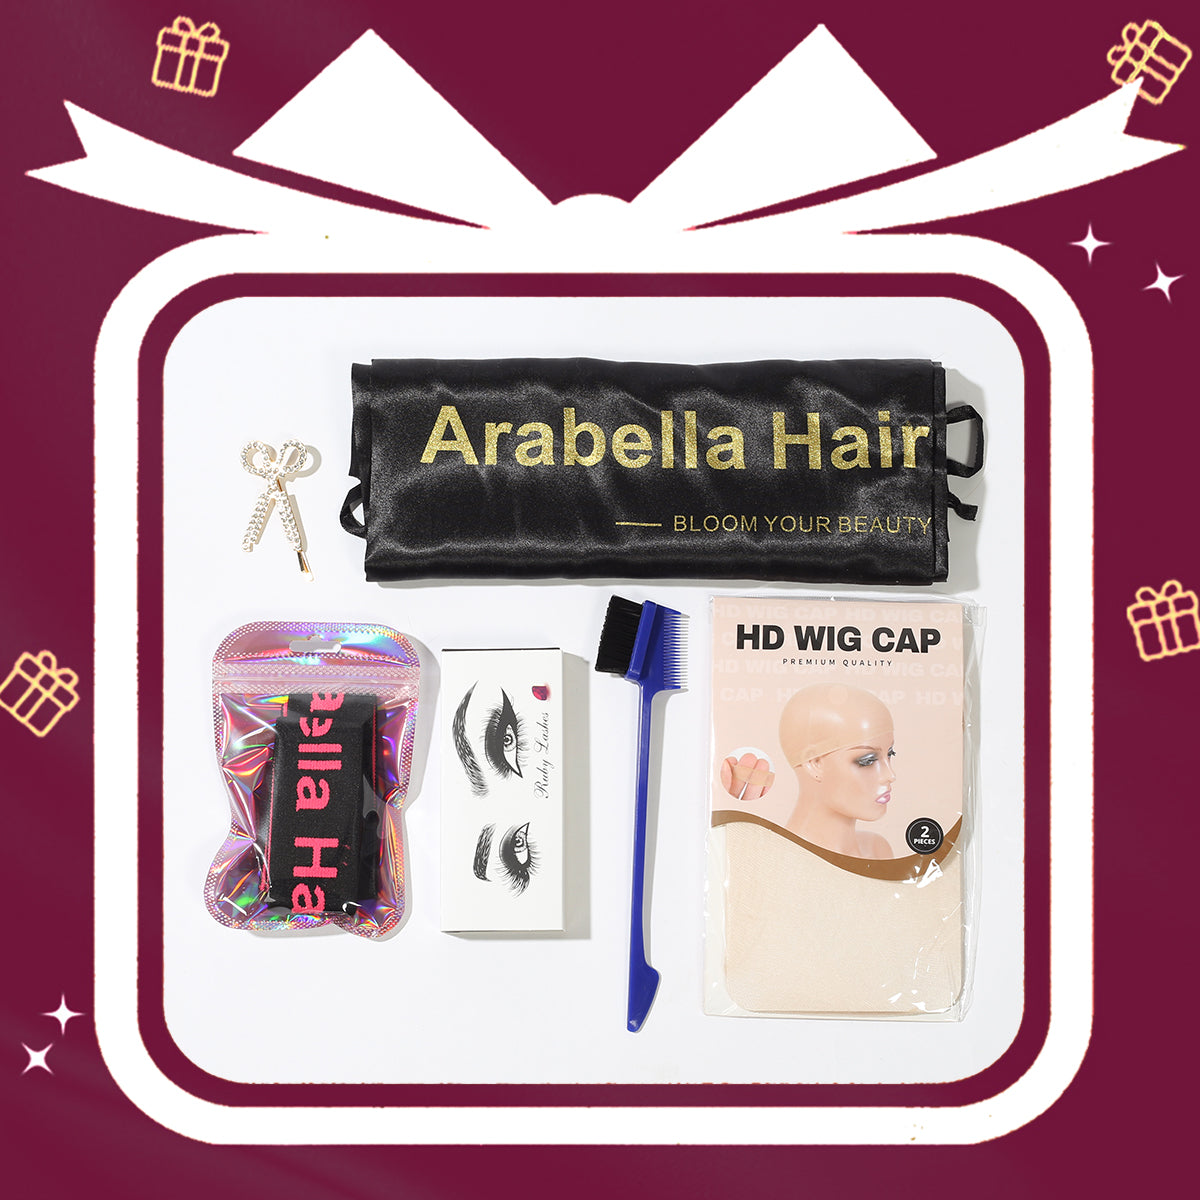 Arabella Free Gifts Package, Includes Random 4-5 Gifts : Wig Cap, 3D Mink Eyelashes, Elastic Headband, Clips,Edge Brush